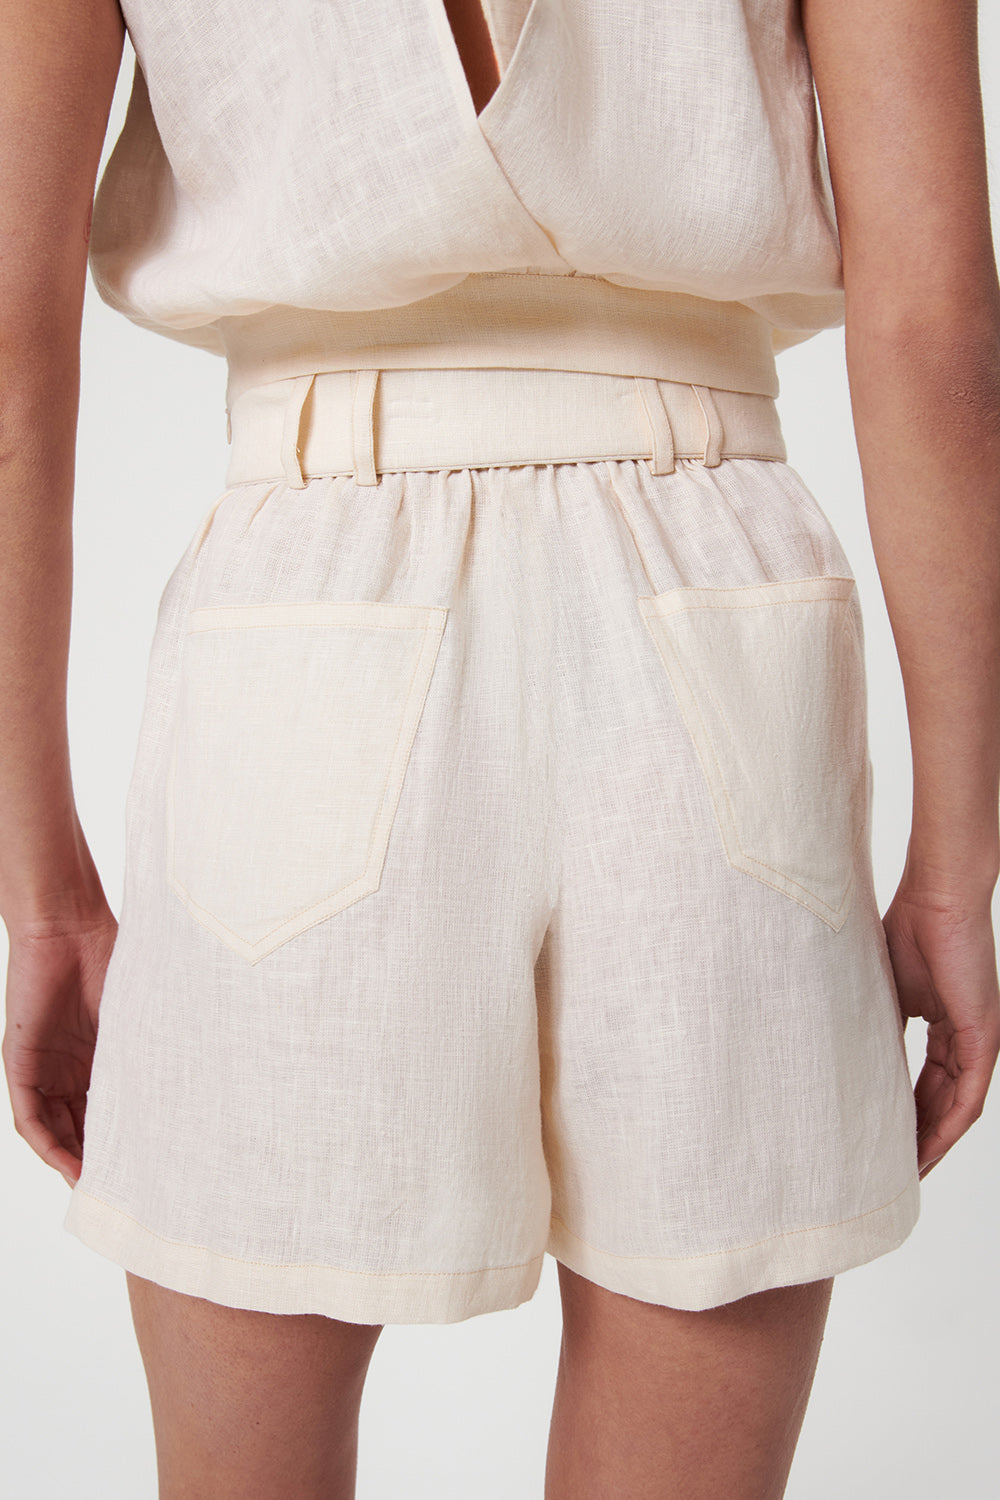 Ingrid Embroidered Shorts